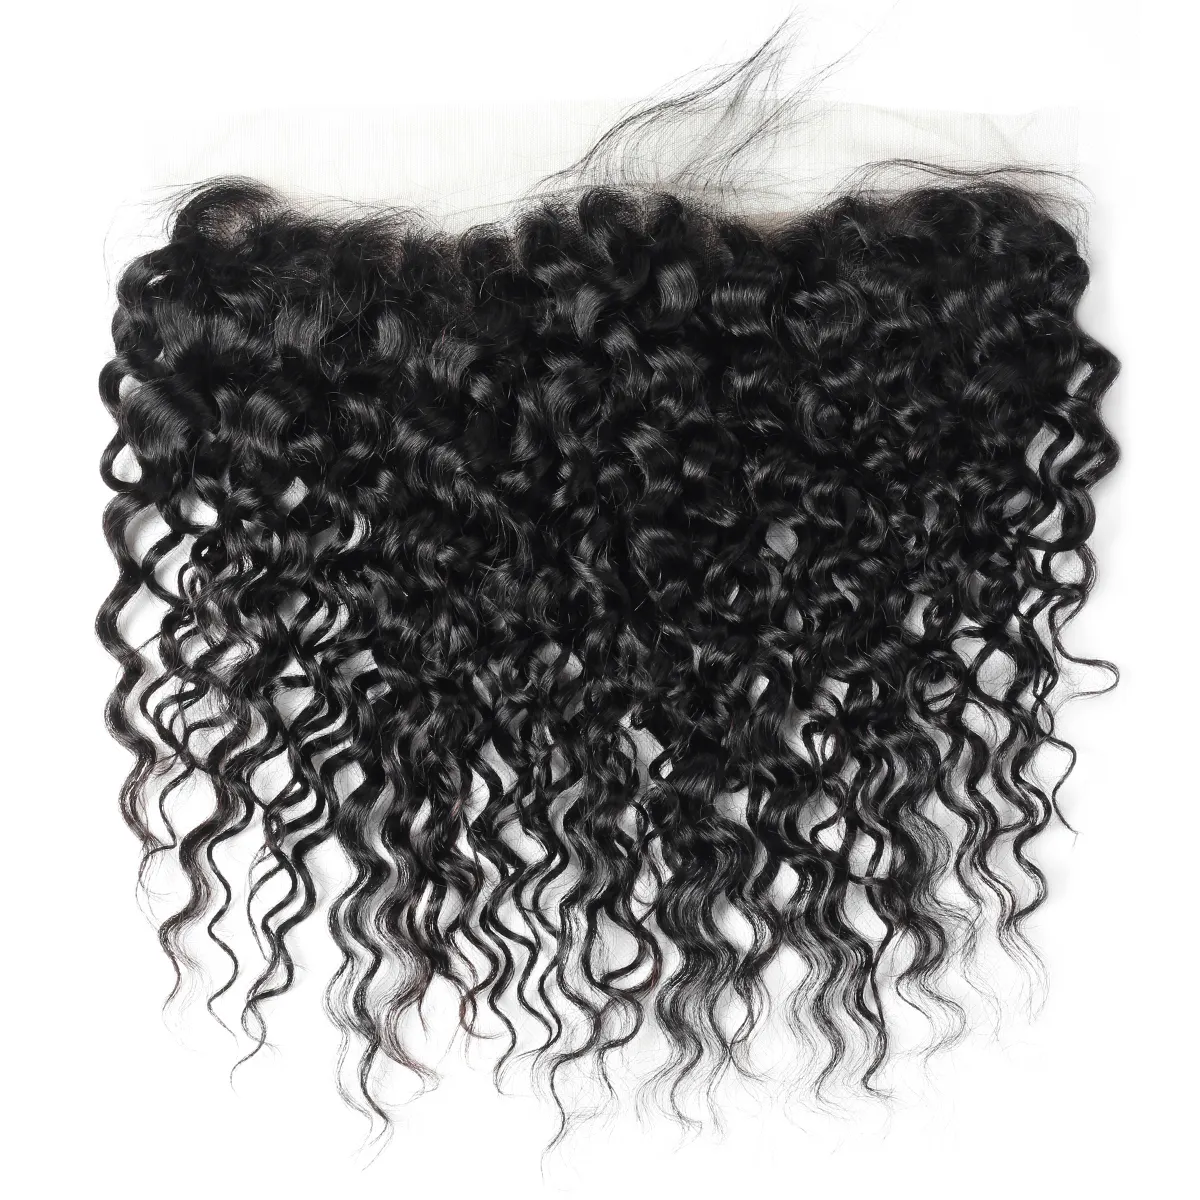 AMLHAIR-extensiones de pelo brasileñas con encaje Frontal, accesorio capilar de color negro con ondas al agua, Natural, transparente, 13x4